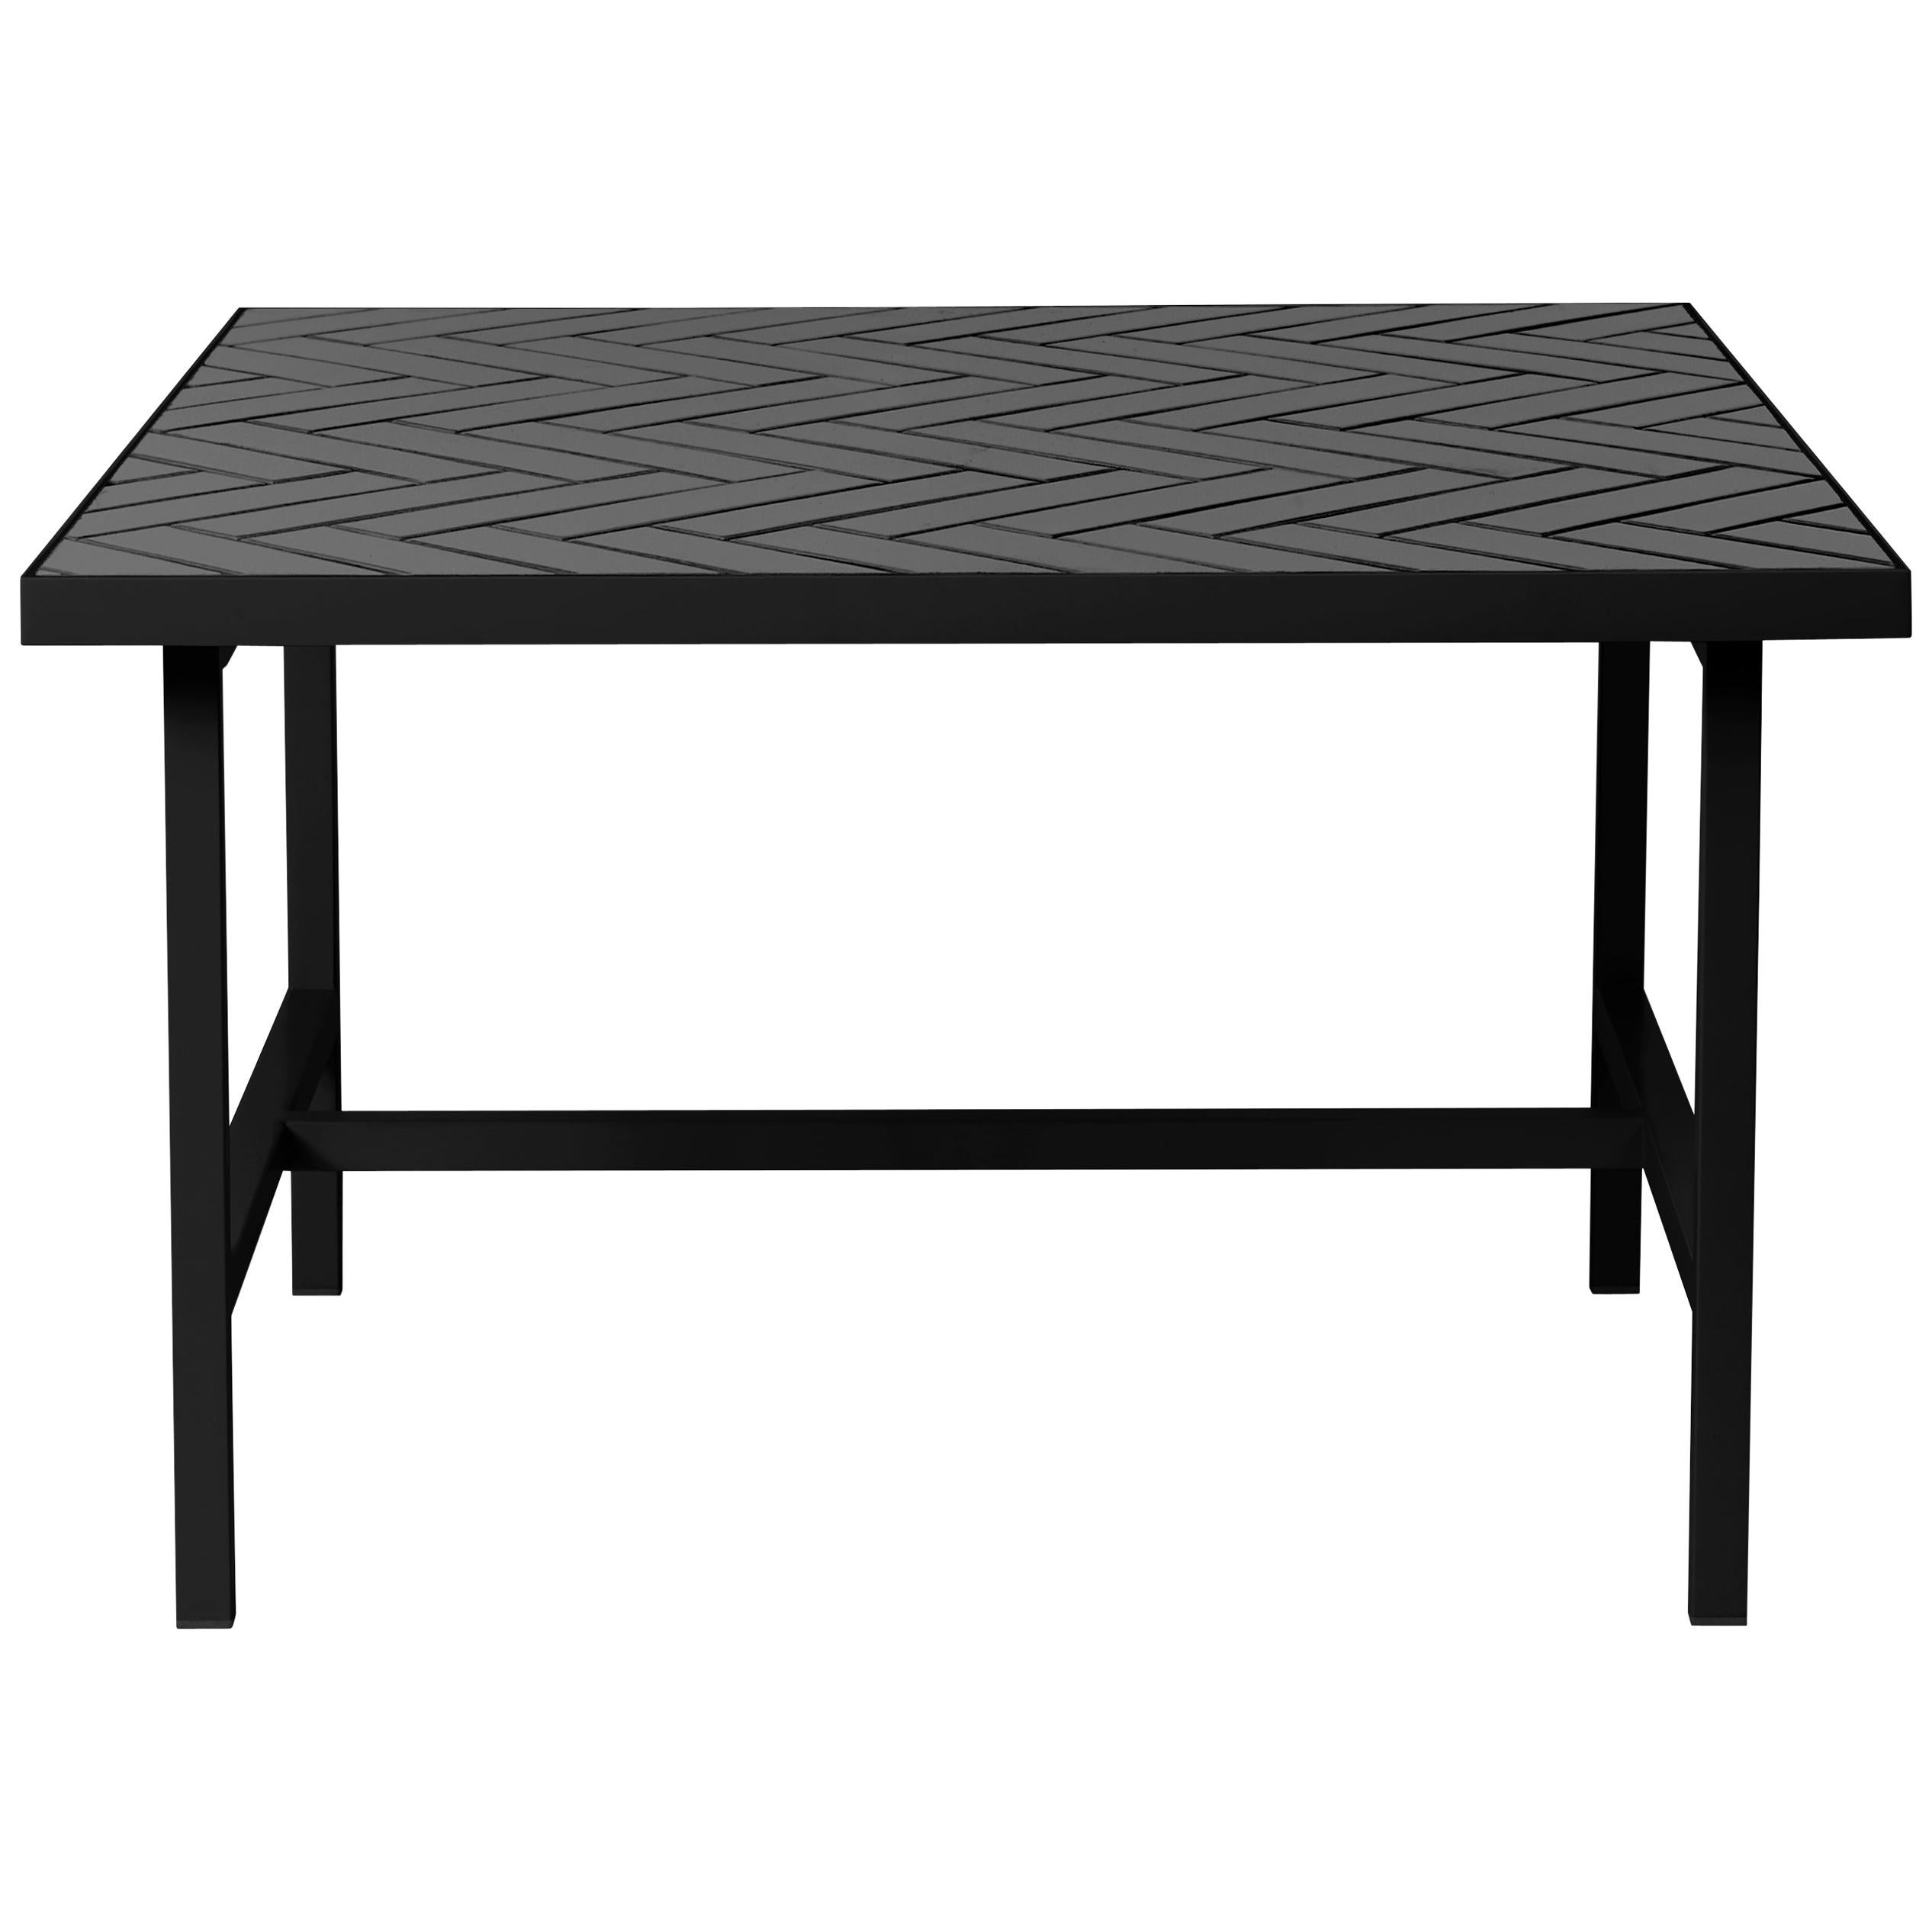 For Sale: Black (Soft black) Herringbone Coffee Table, by Charlotte Høncke from Warm Nordic